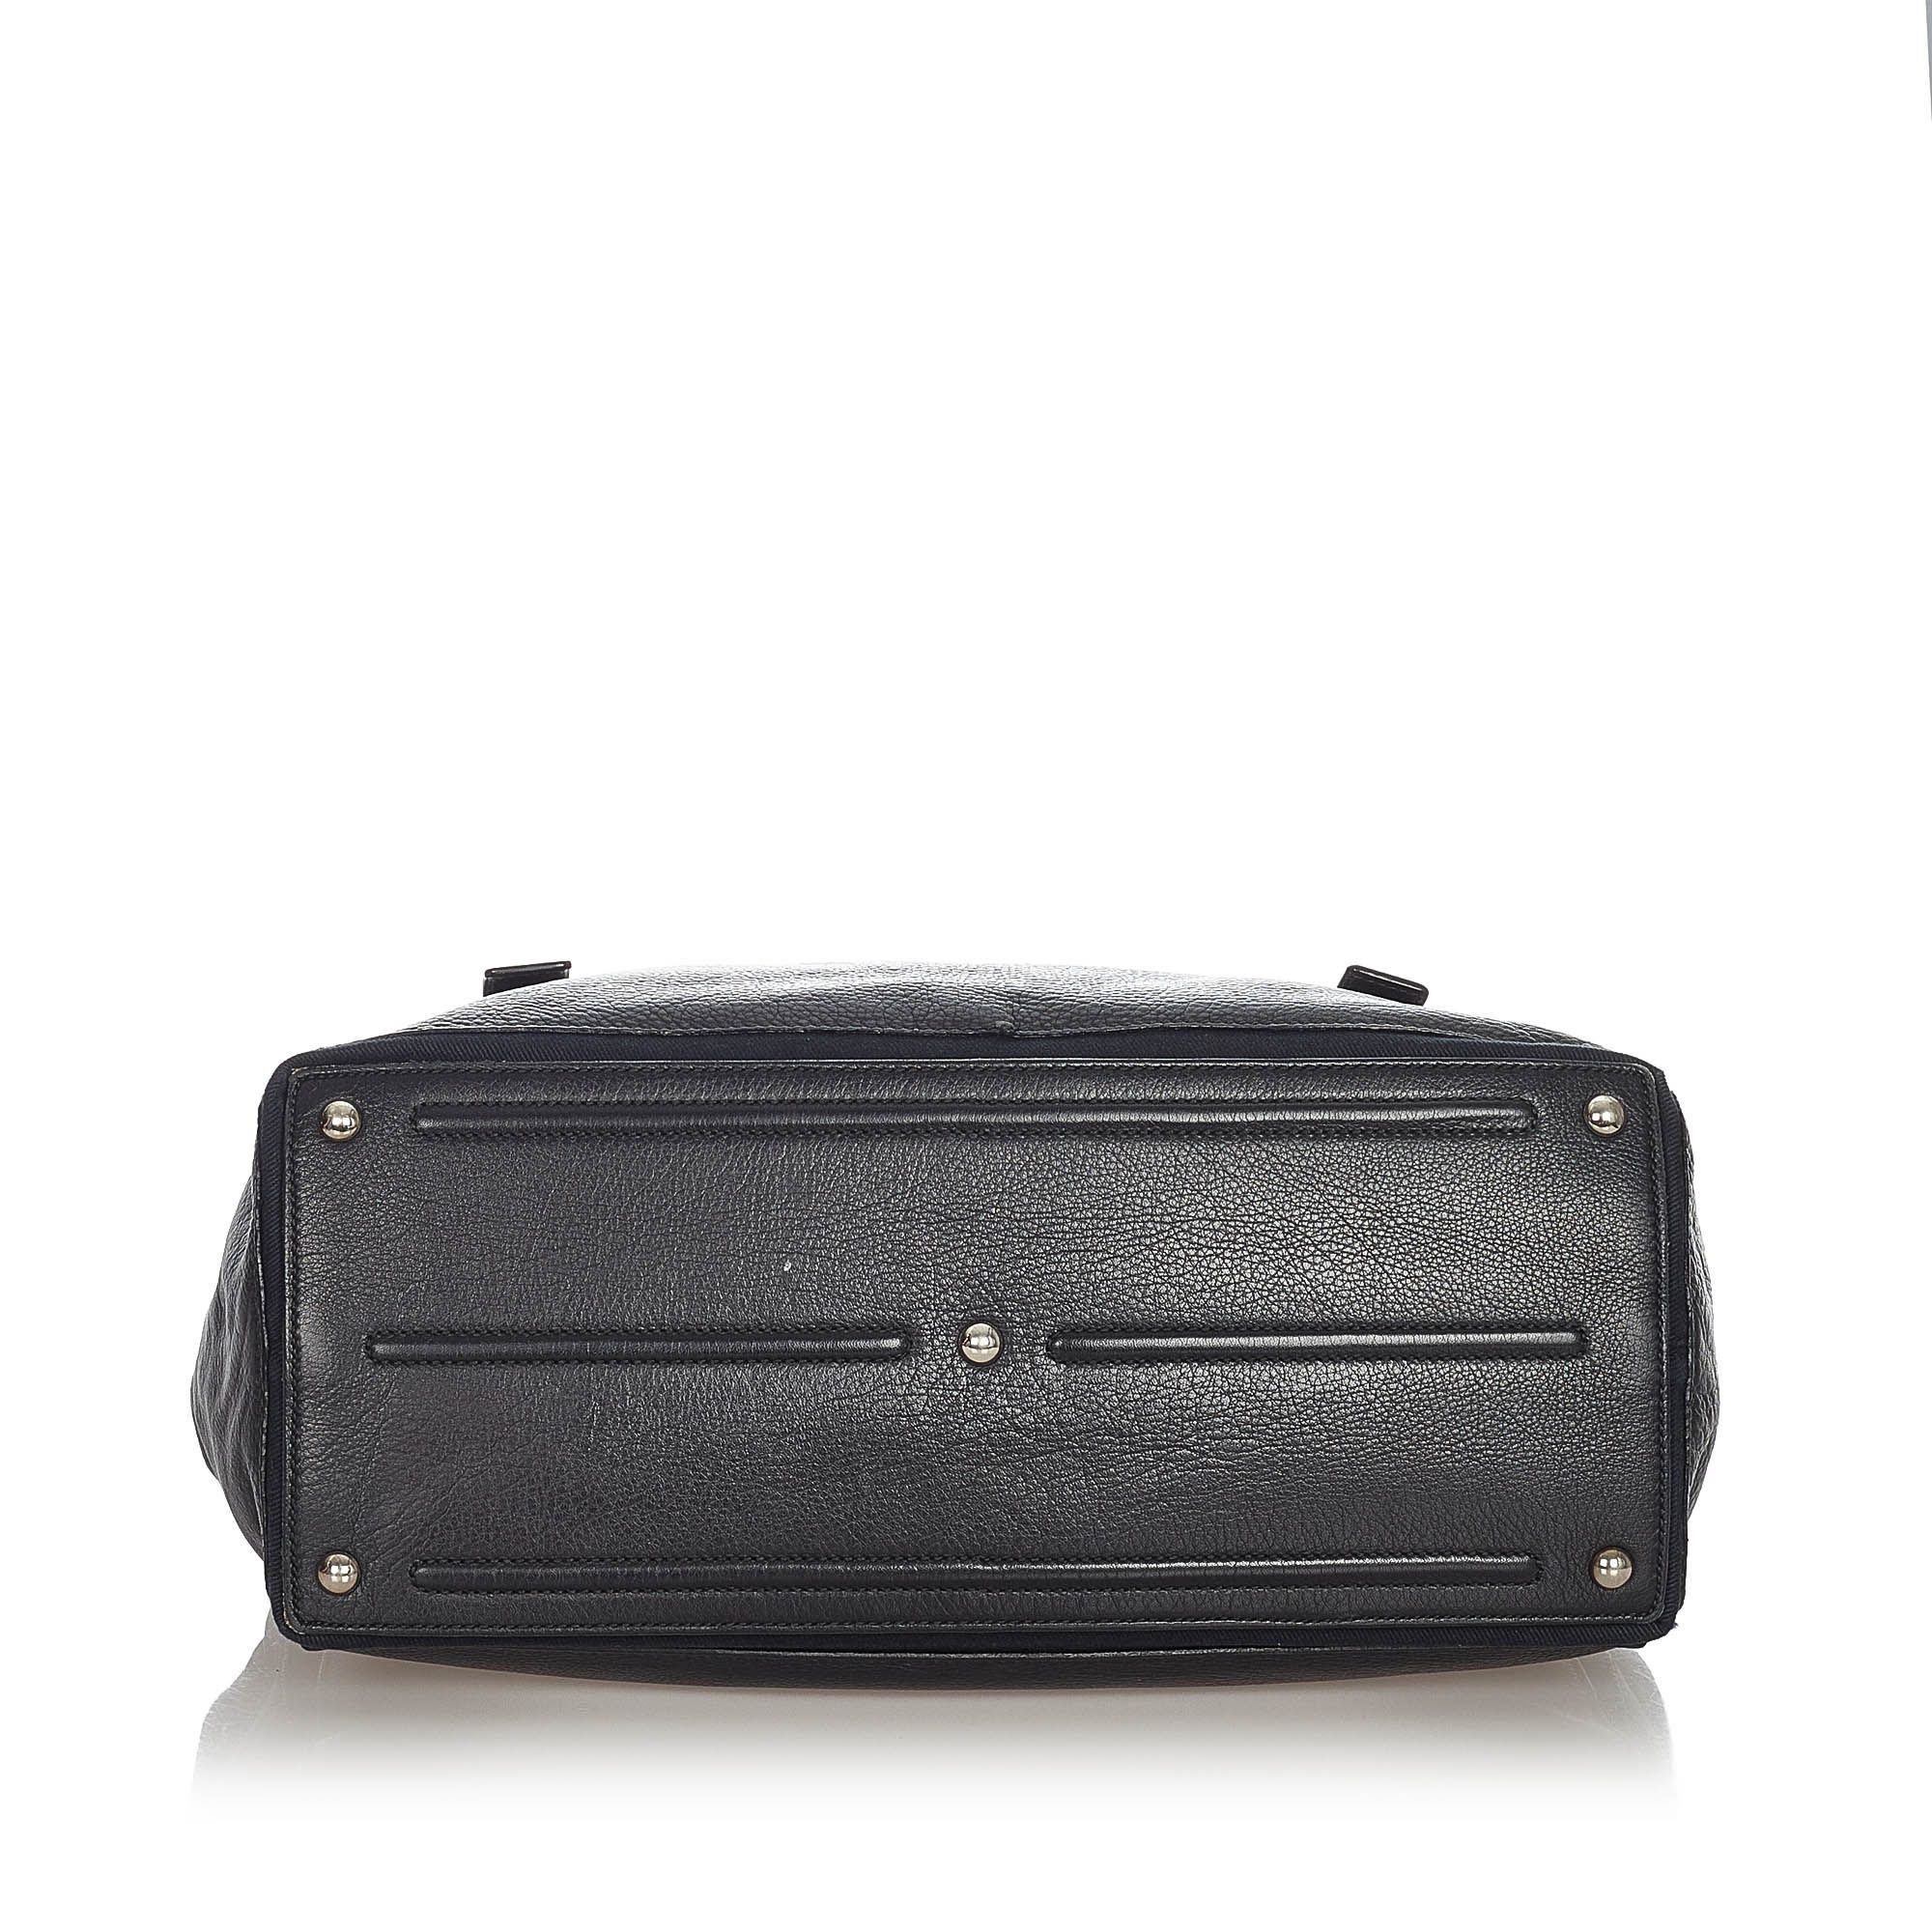 Vintage YSL Muse Two Leather Handbag Black